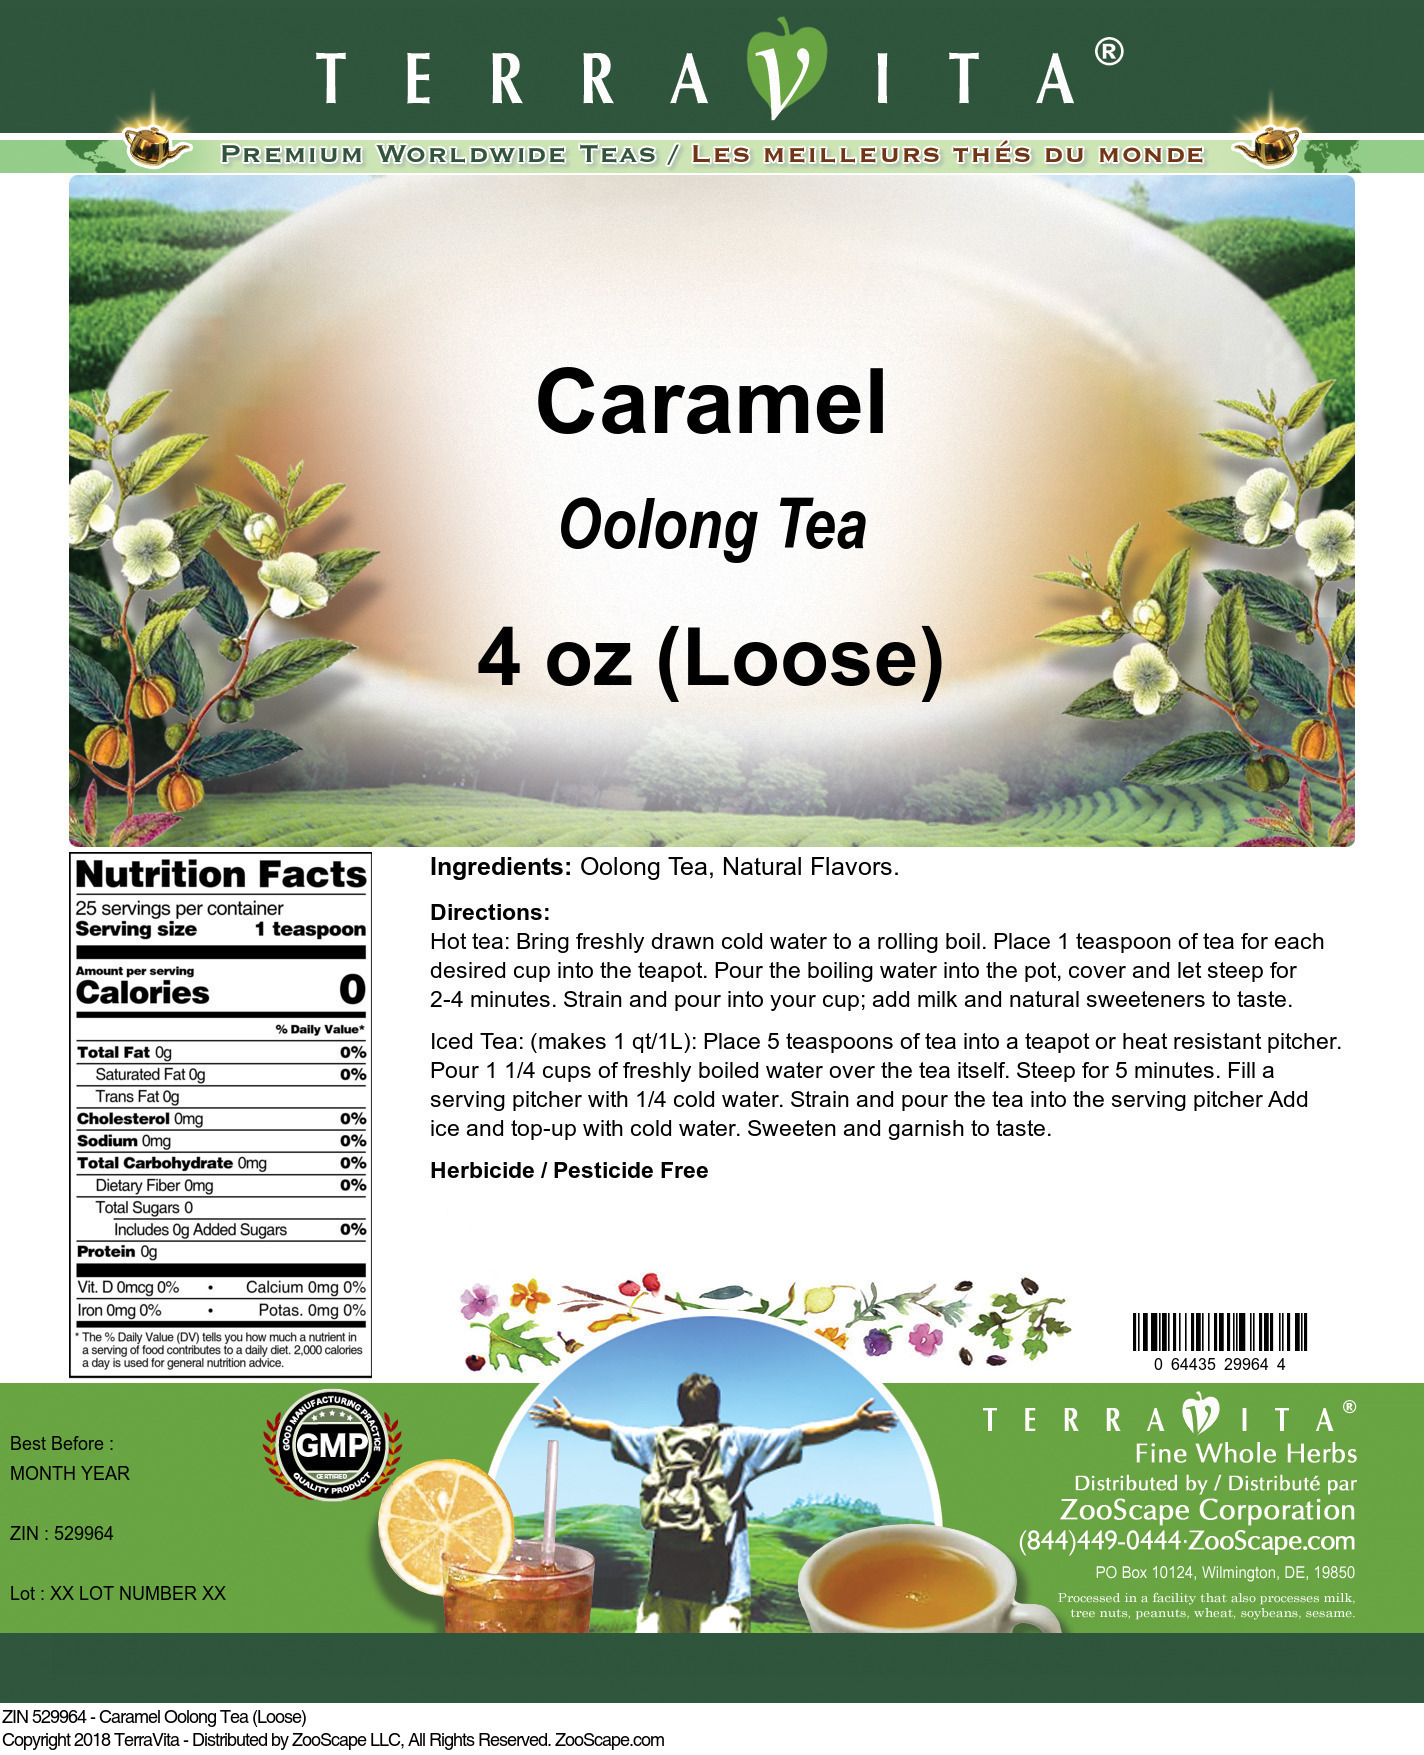 Caramel Oolong Tea (Loose) - Label